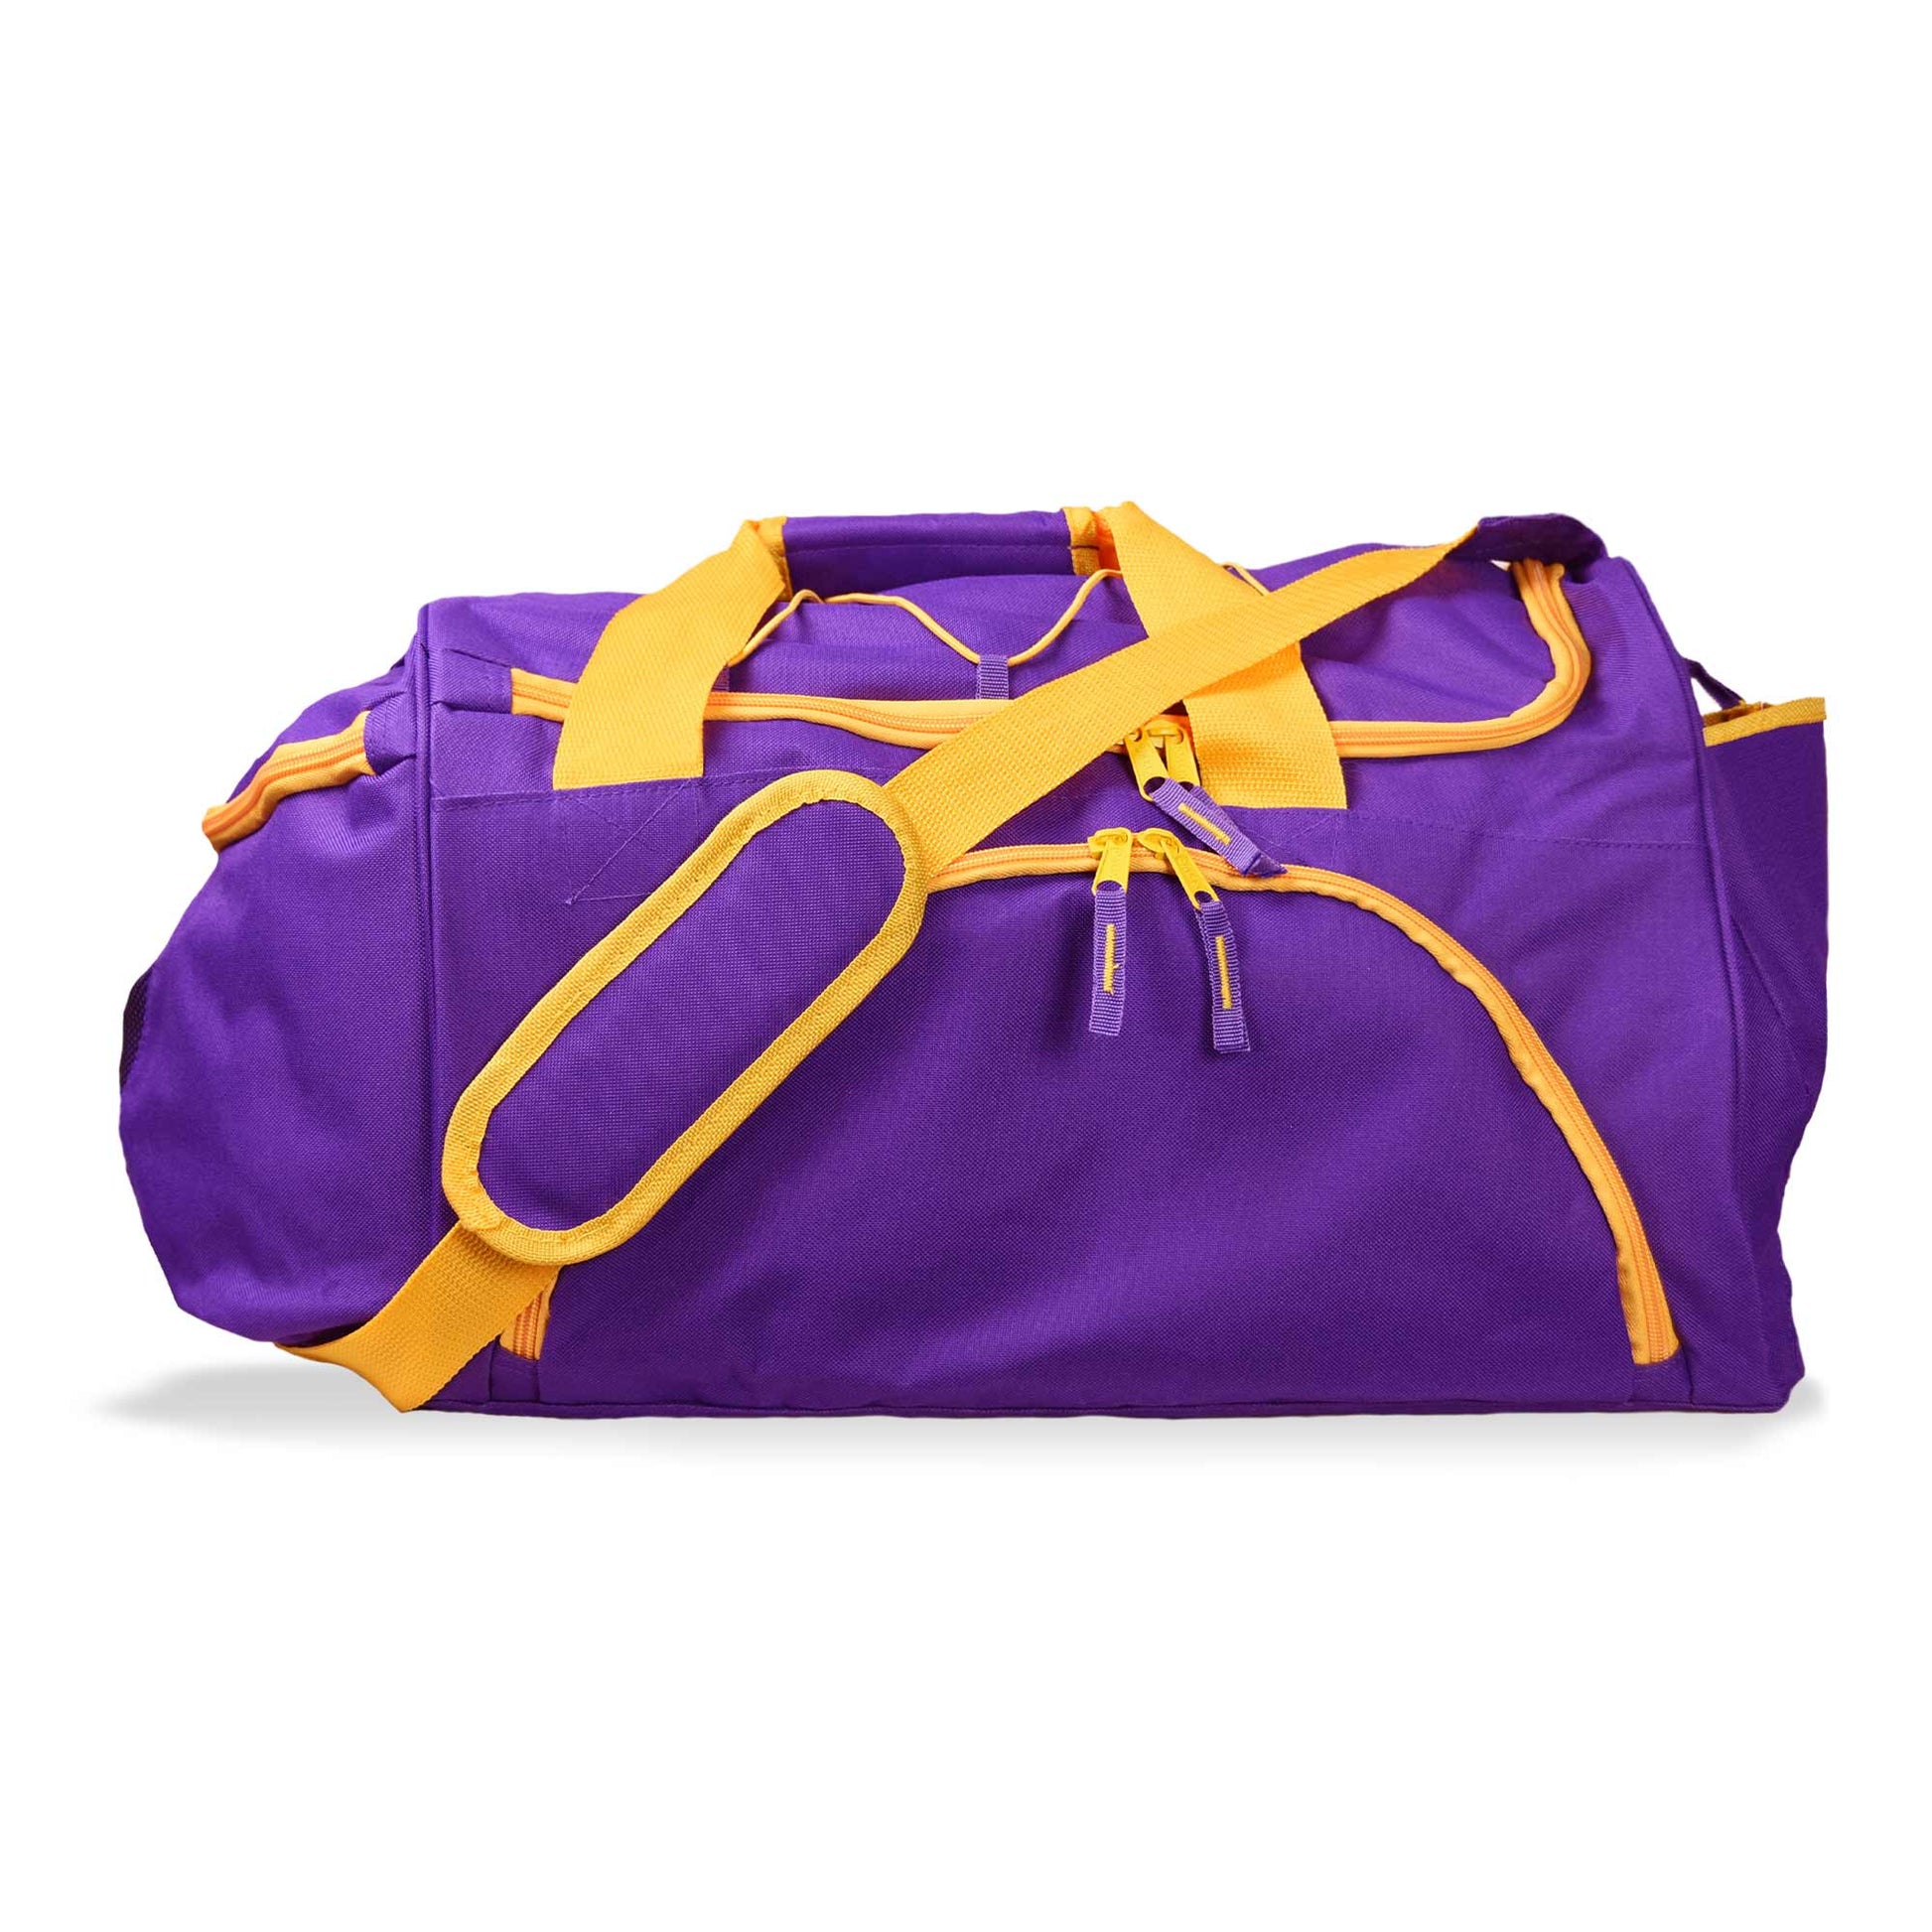 Canvas Duffle Bag, 24 Large Heavy Duty Duffle Bag, 46.5 Long Adjustable  Shoulder Strap, Black Duffel Bag, Big Sport Gym Foldable Duffel Bag